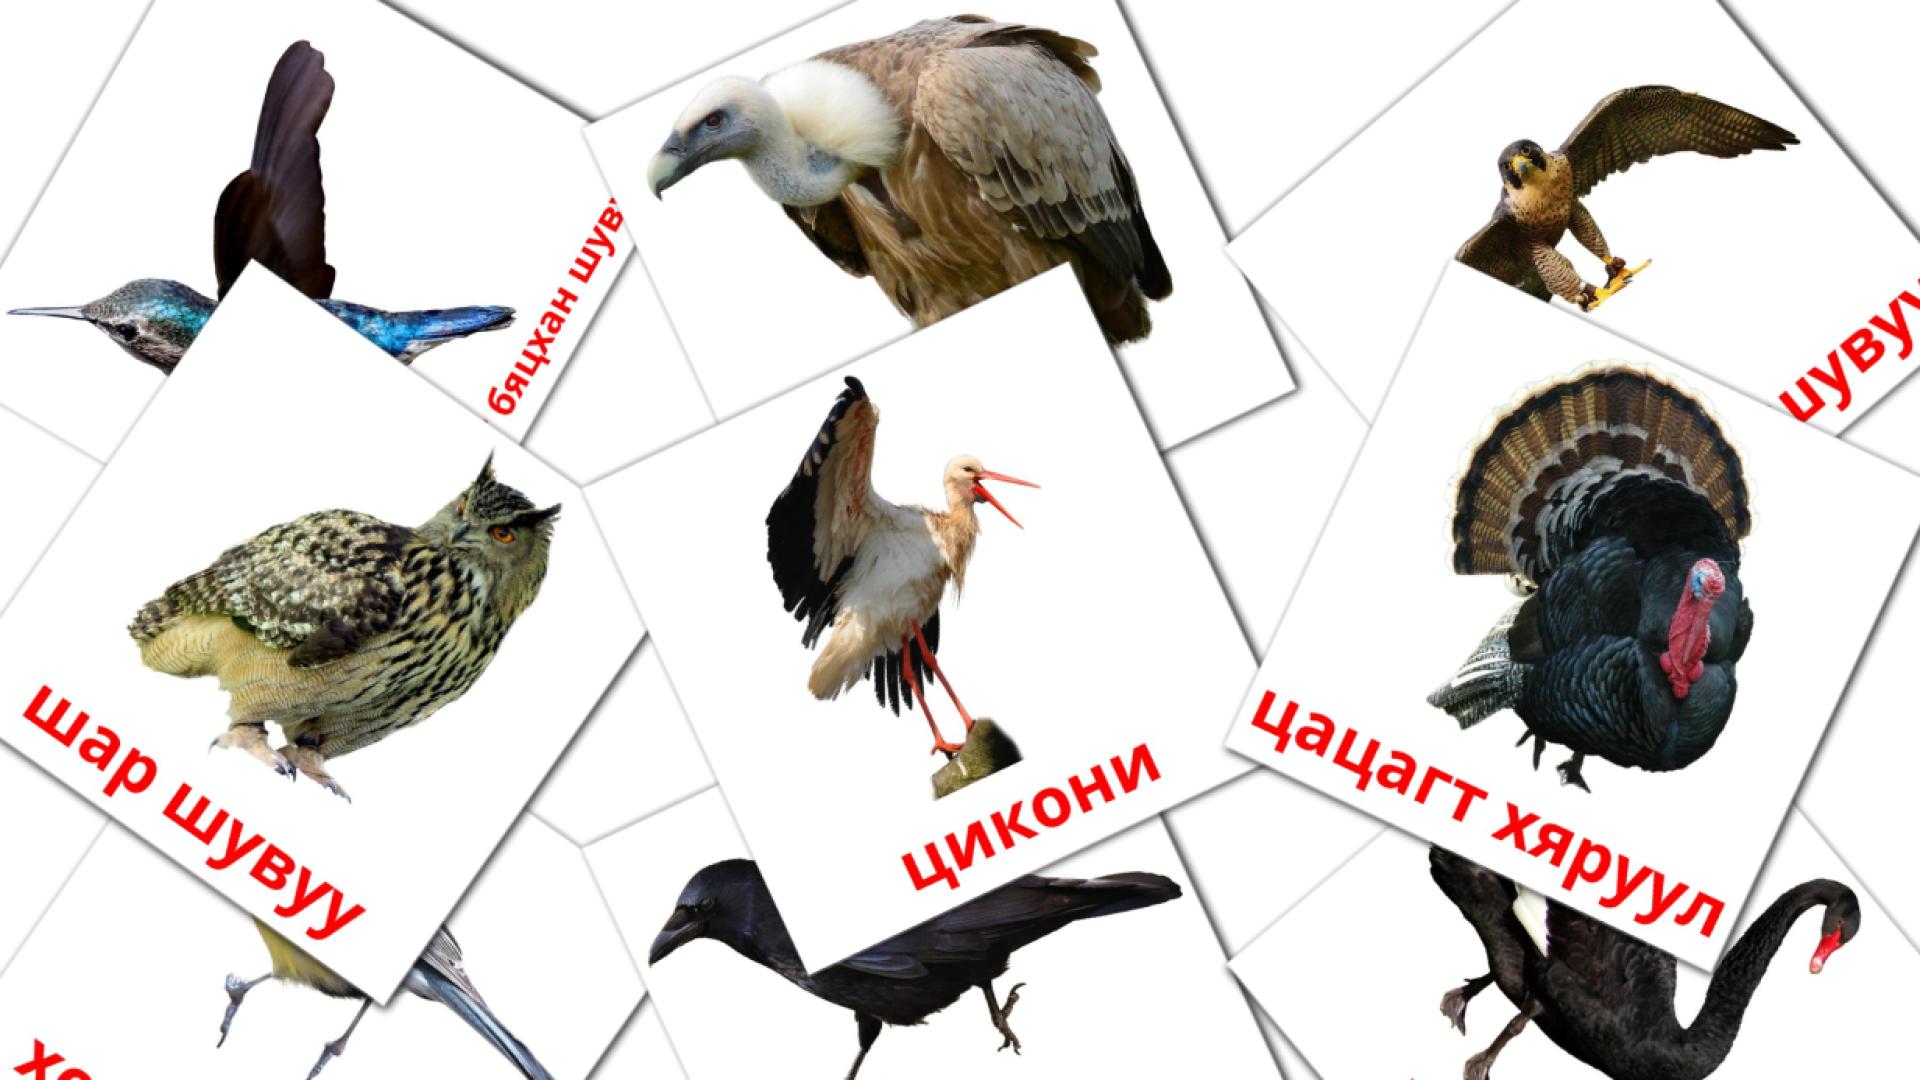 Шувууд mongolian vocabulary flashcards